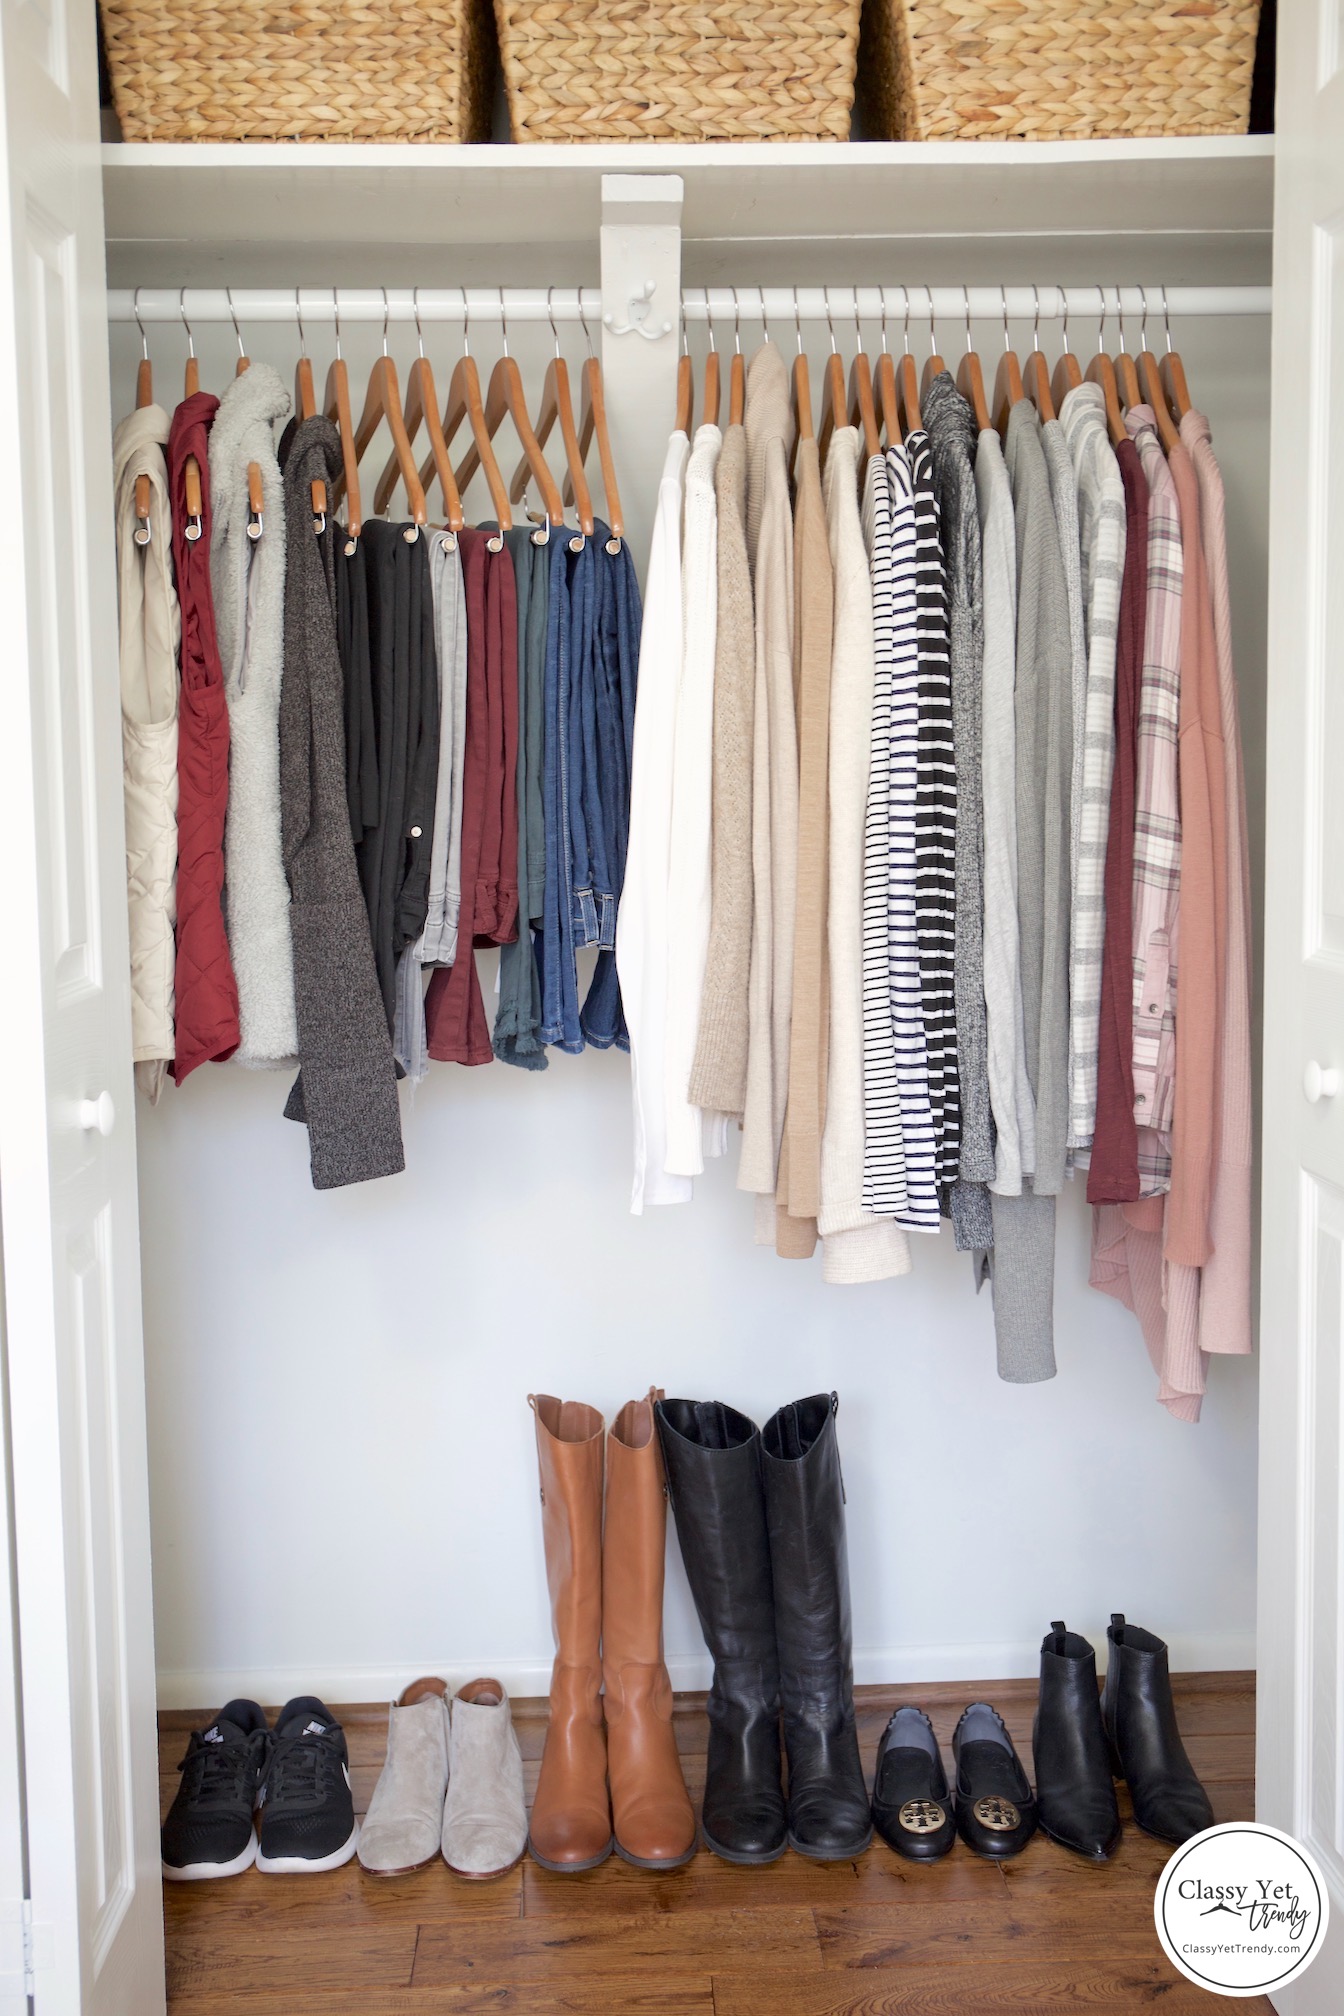 My Winter 2018-2019 Capsule Wardrobe - full closet